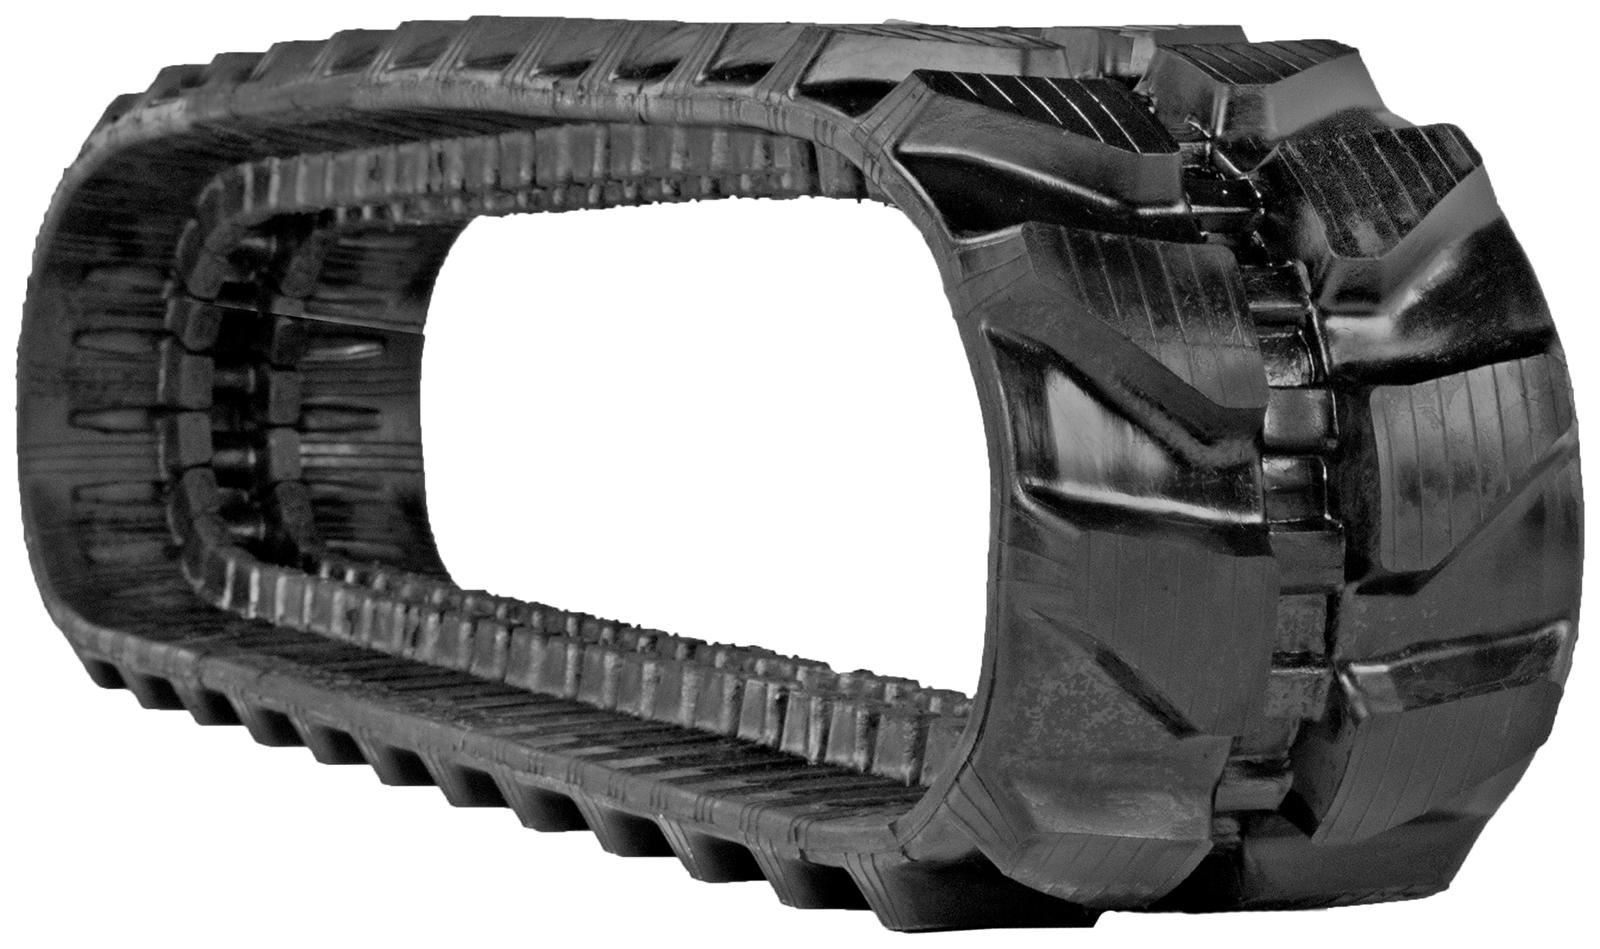 set of 2 9" heavy duty rubber track (230x48x64)